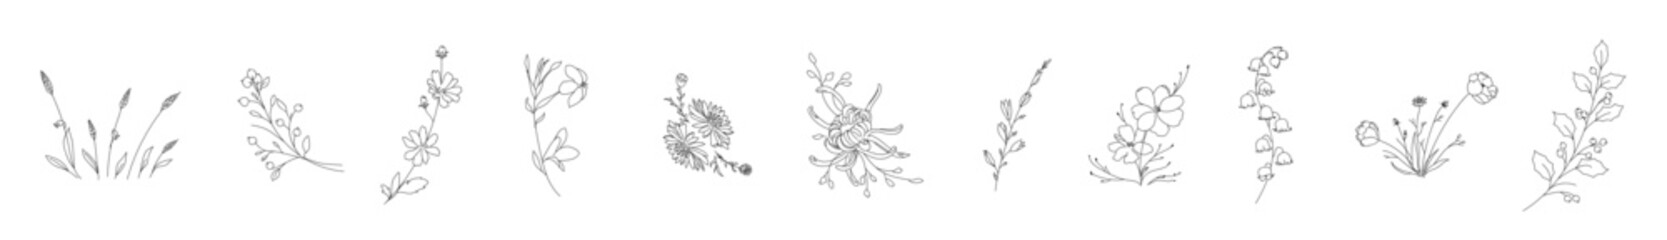 Botanical drawing. Minimal plant logo design,  flower abstract sketch element collection. Vector hand drawn wedding invitation bouquet decoration set. Journal, calendar, and frame design